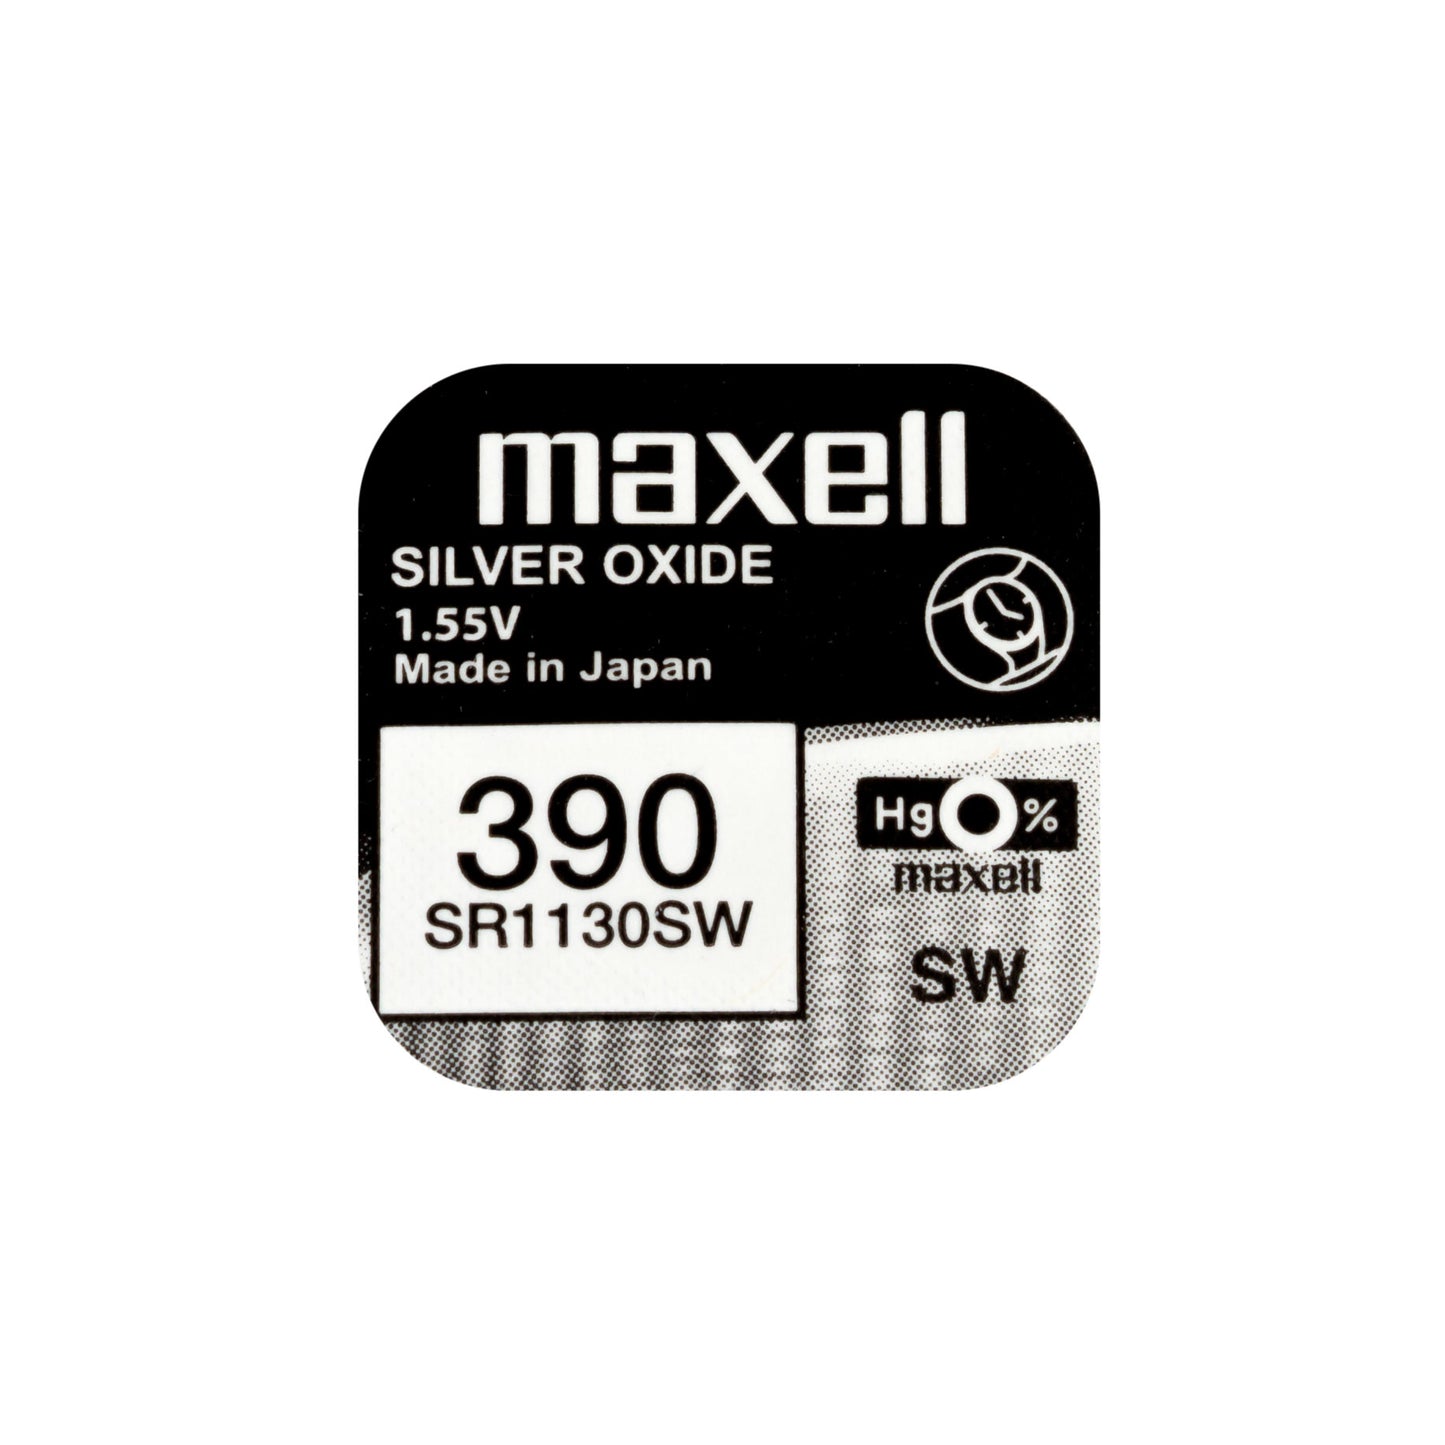 Maxell SR1130SW (390) Silver Oxide Watch Batteries